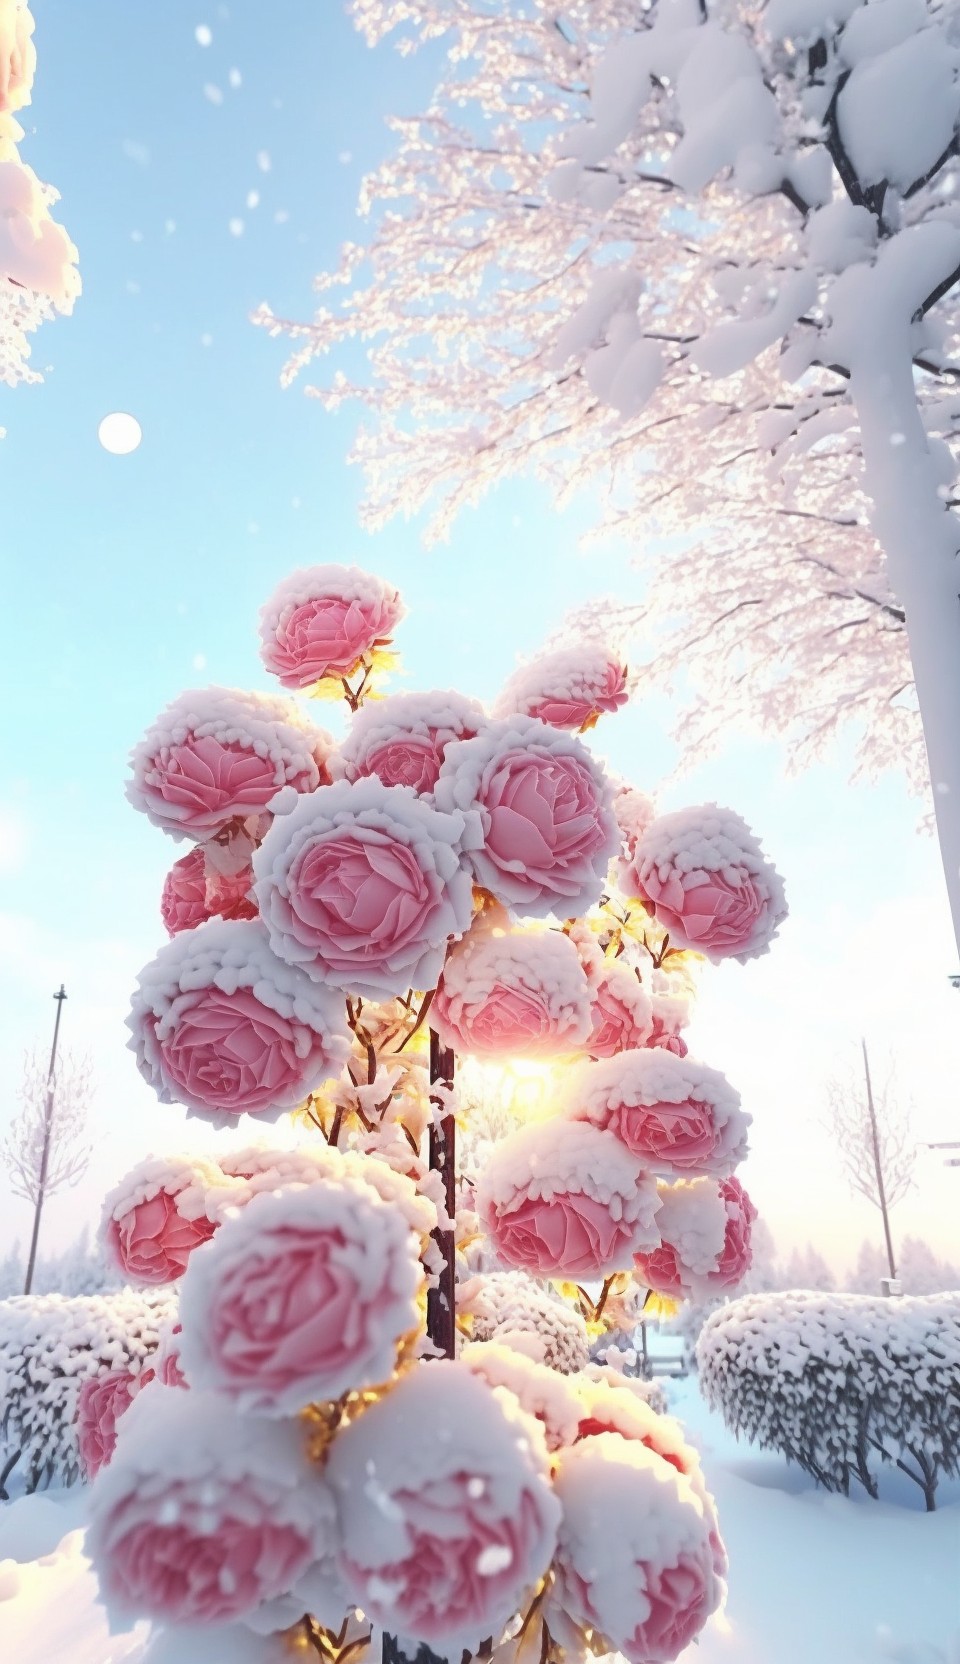 roses in snow